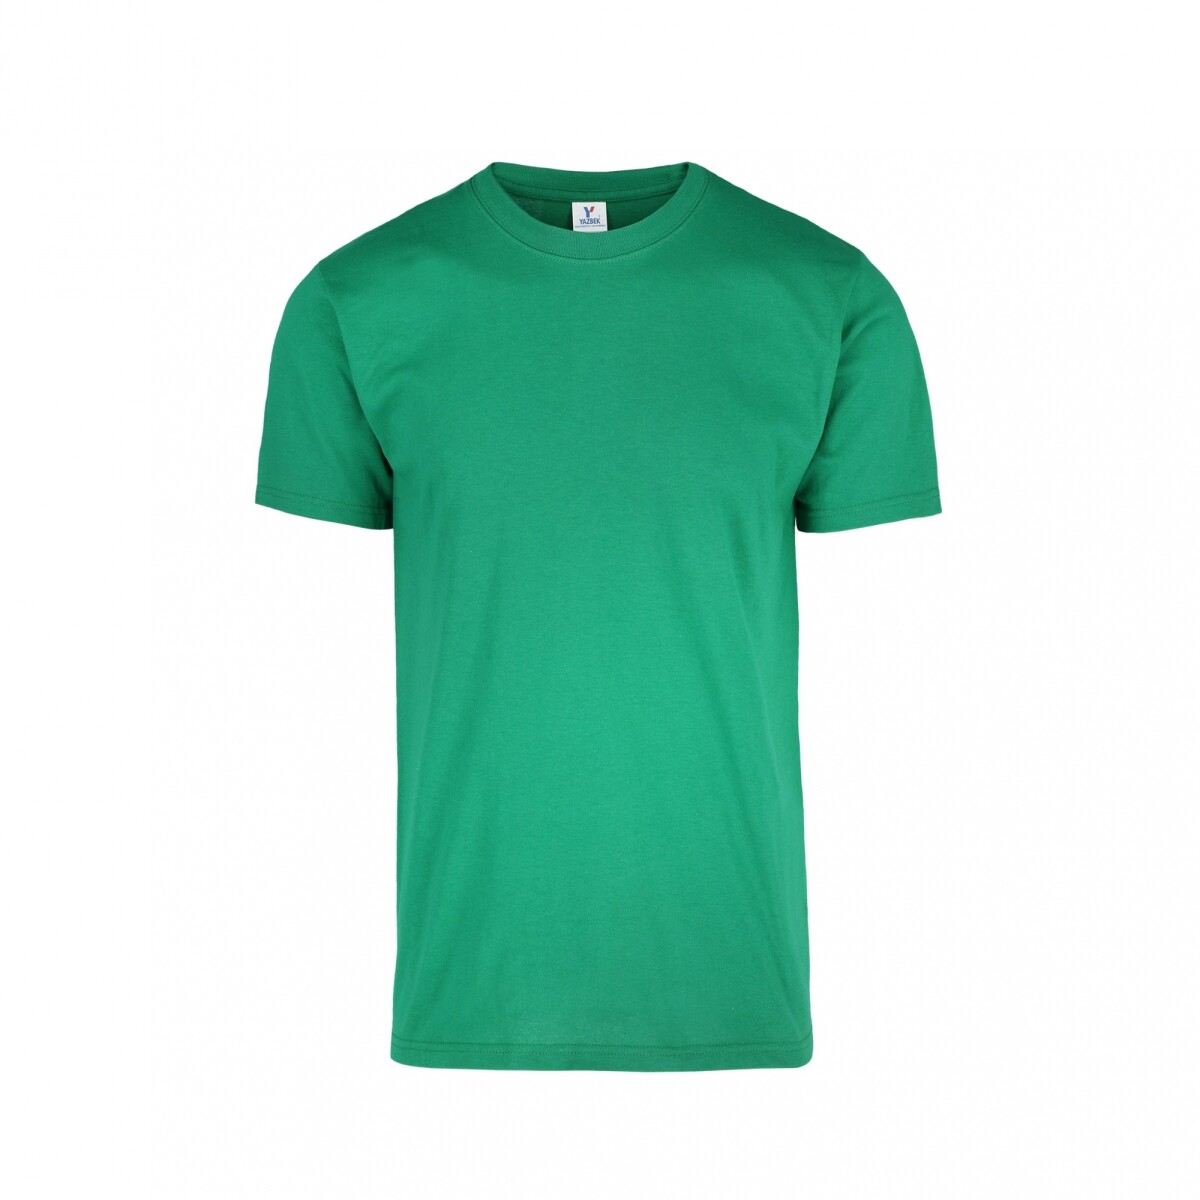 Camiseta a la base peso completo - Verde jade 